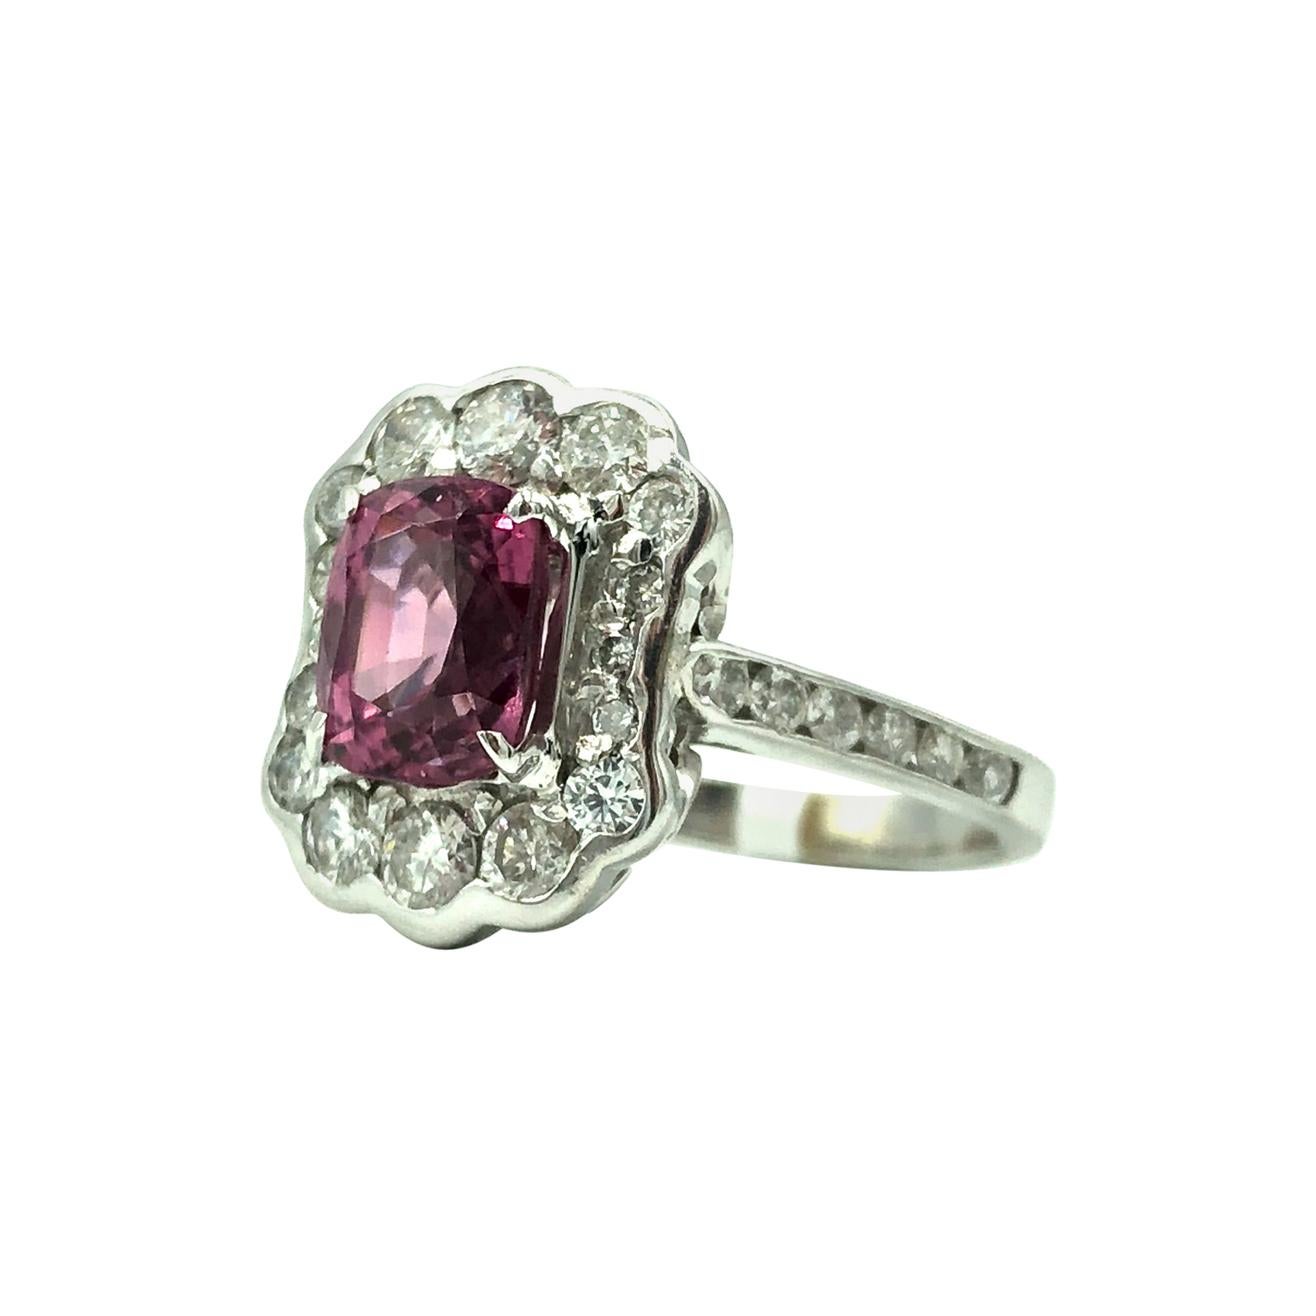 Rare Pink Spinel Ring with Diamonds 18 Karat Gold